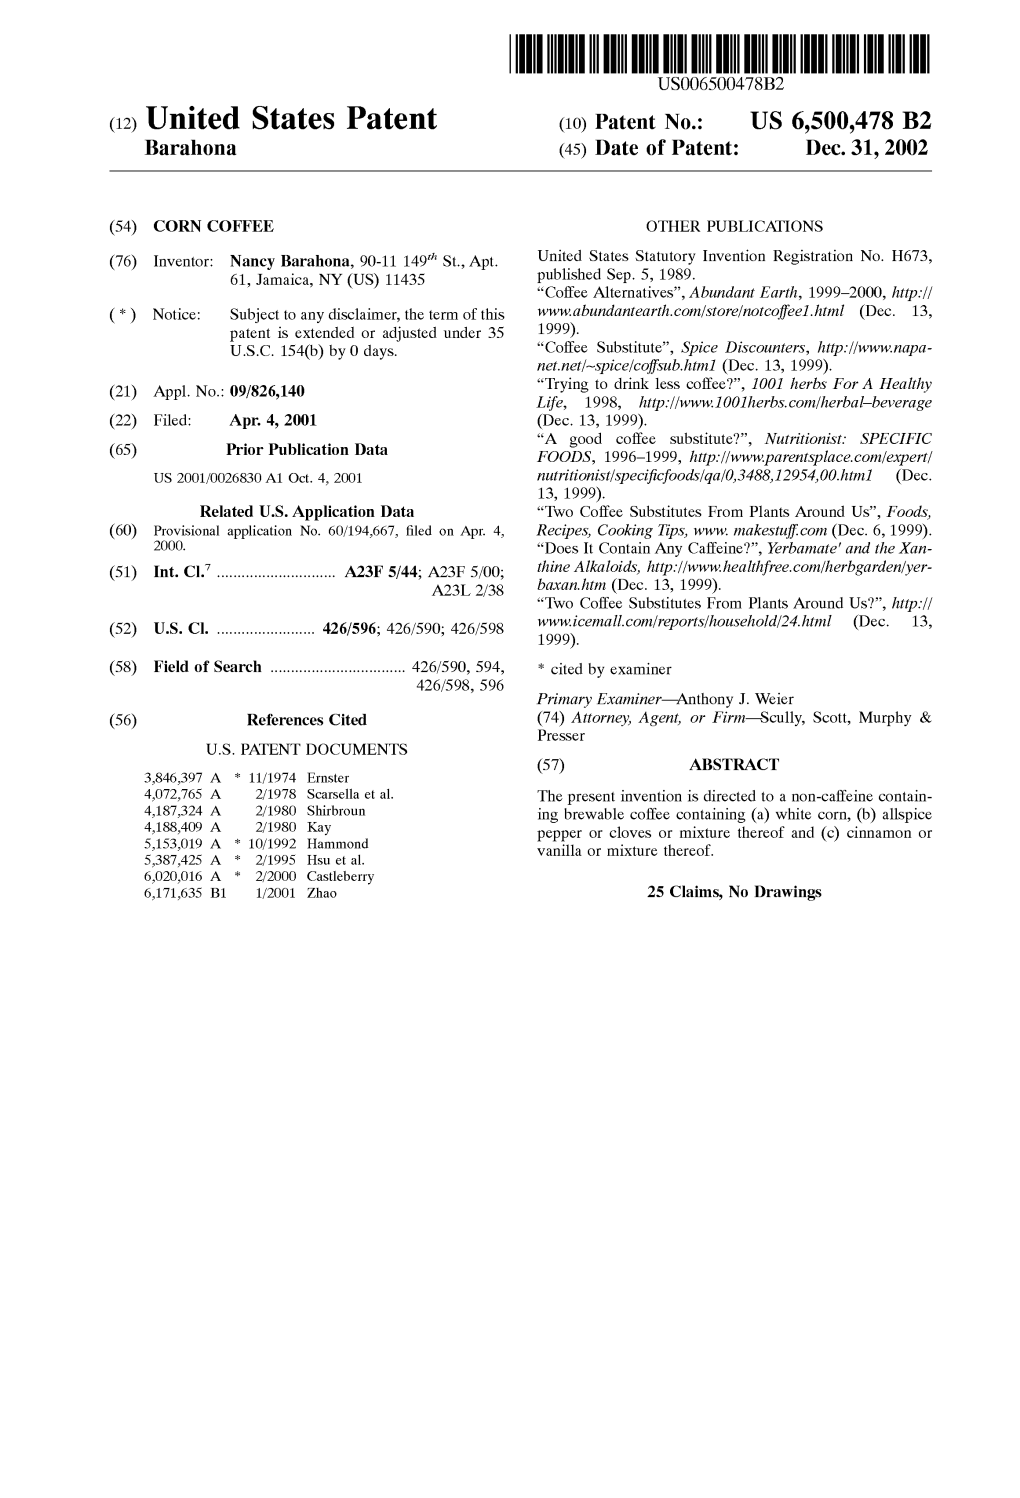 (12) United States Patent (10) Patent No.: US 6,500,478 B2 Barahona (45) Date of Patent: Dec